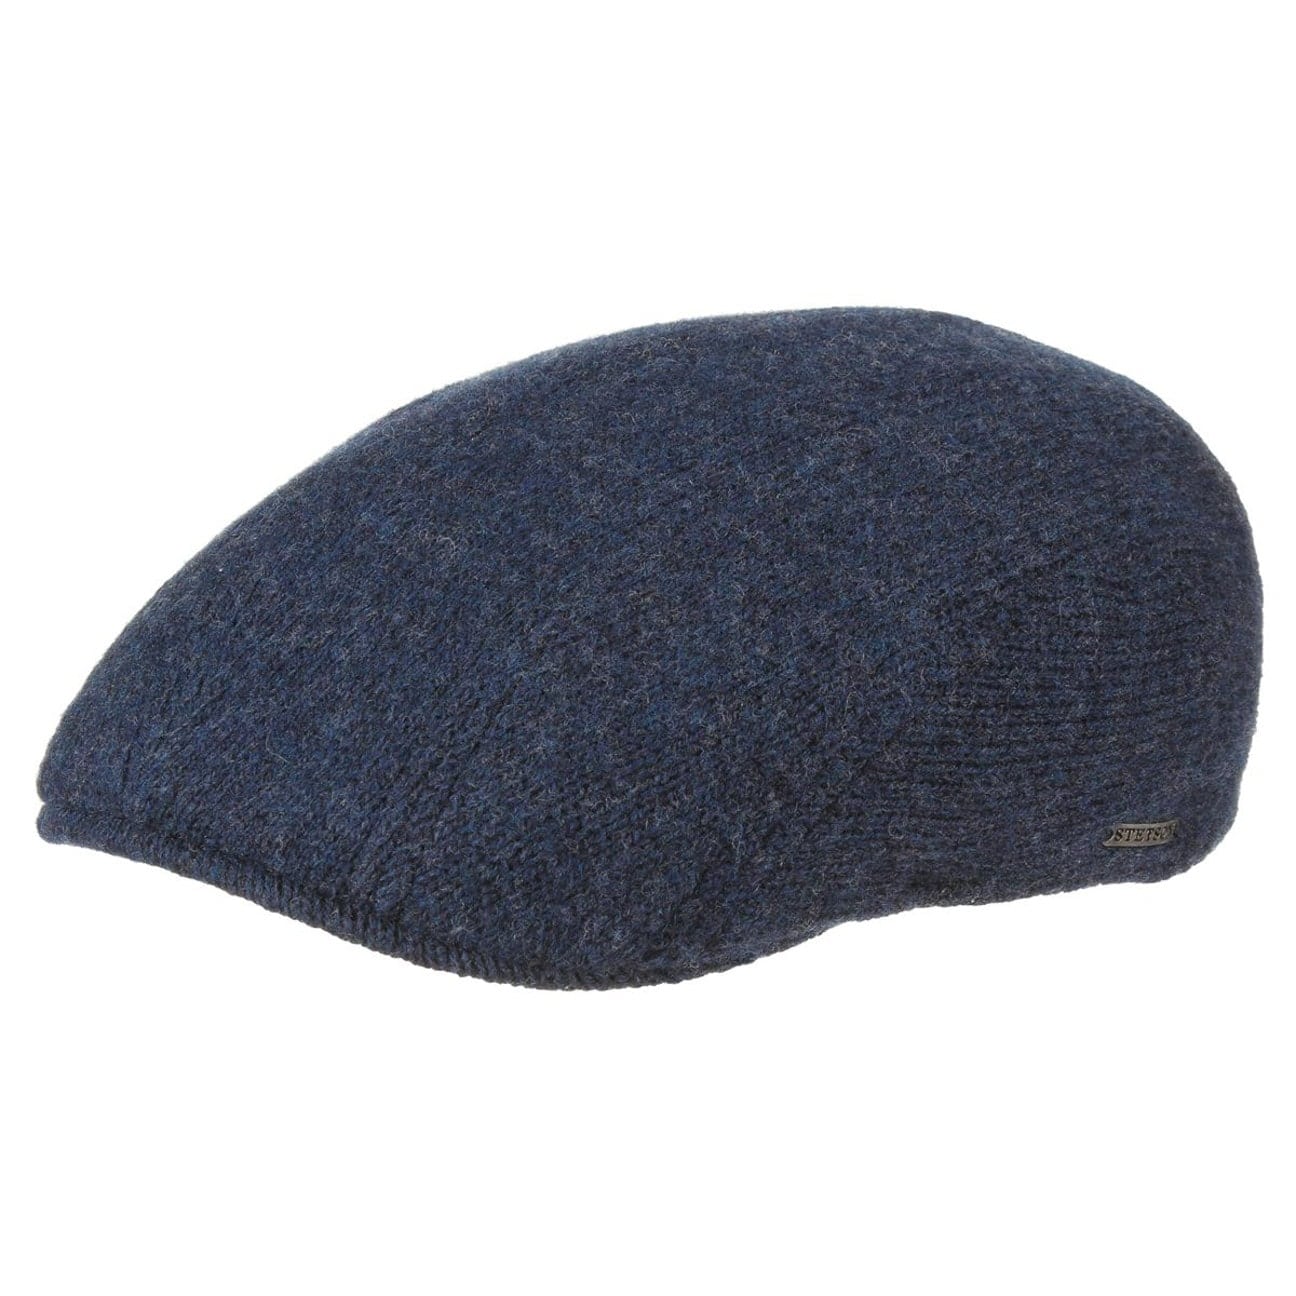 Madison Merino Wool Flat Cap by Stetson, EUR 49,00 --> Hats, caps ...